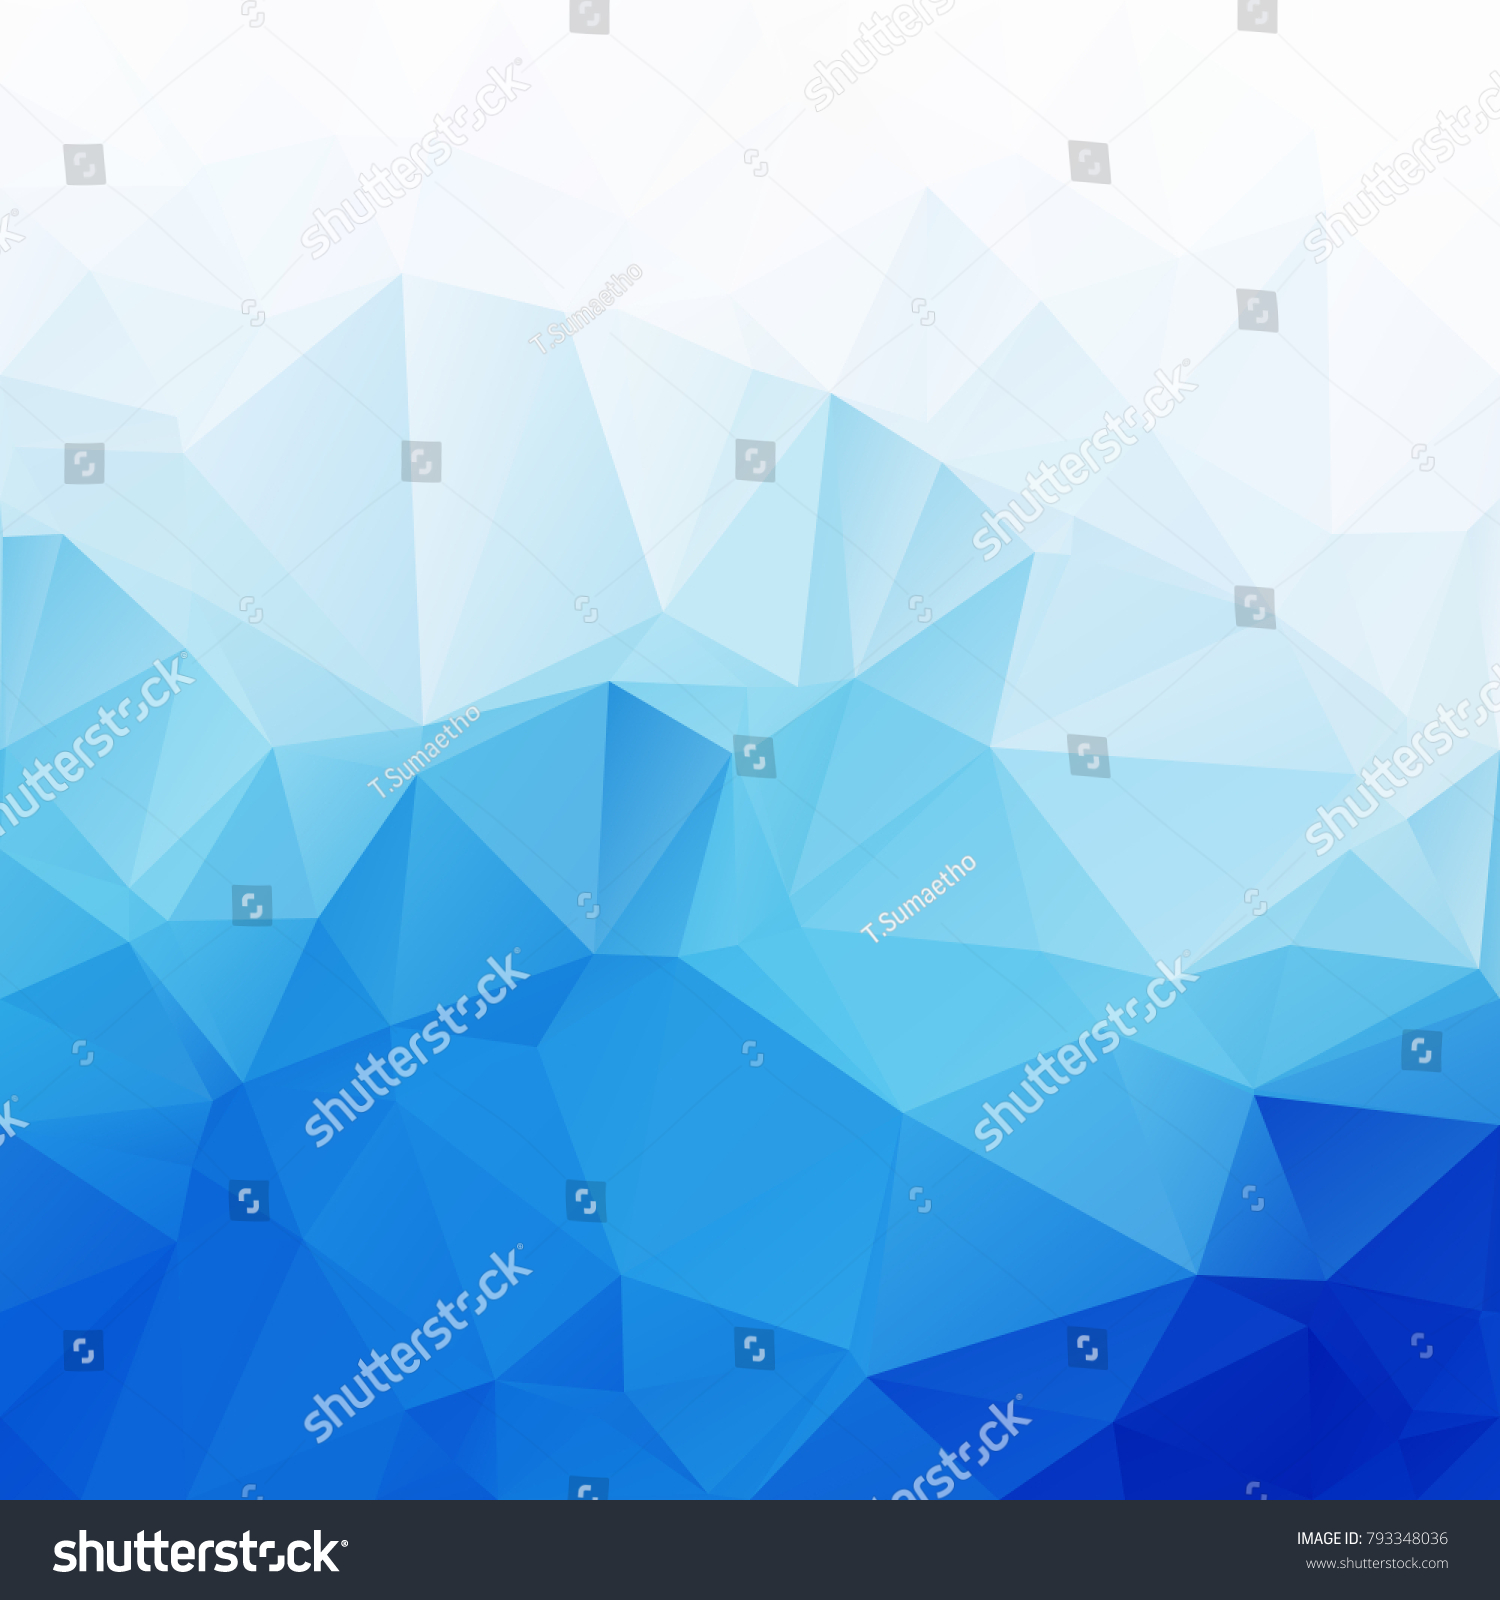 Blue Polygonal Mosaic Background Creative Design Stock Vector ...